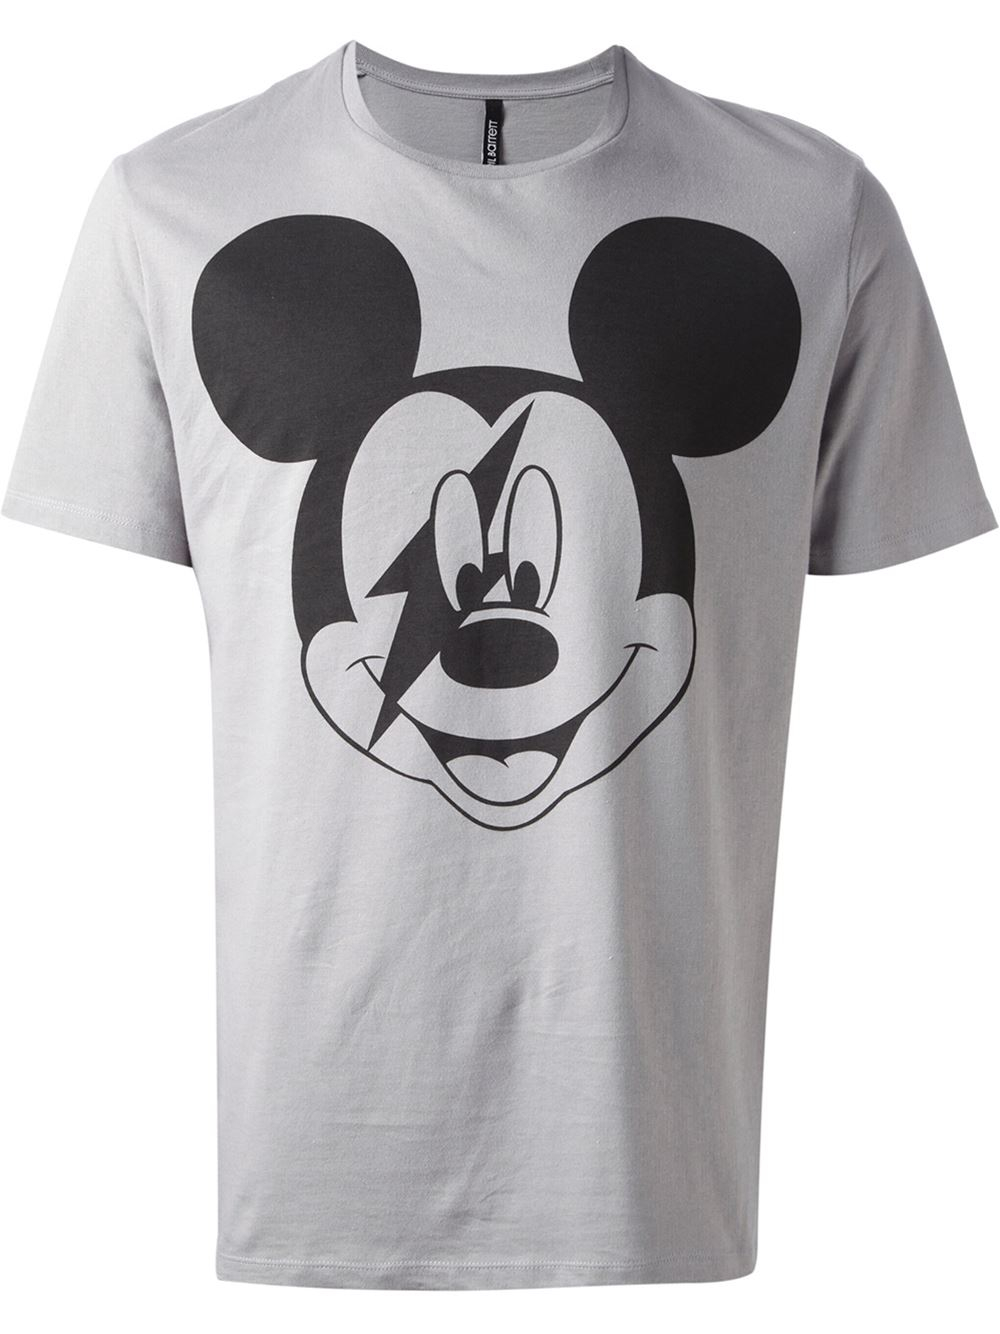 Neil Barrett Mickey Mouse Tshirt in Grey (Gray) for Men - Lyst